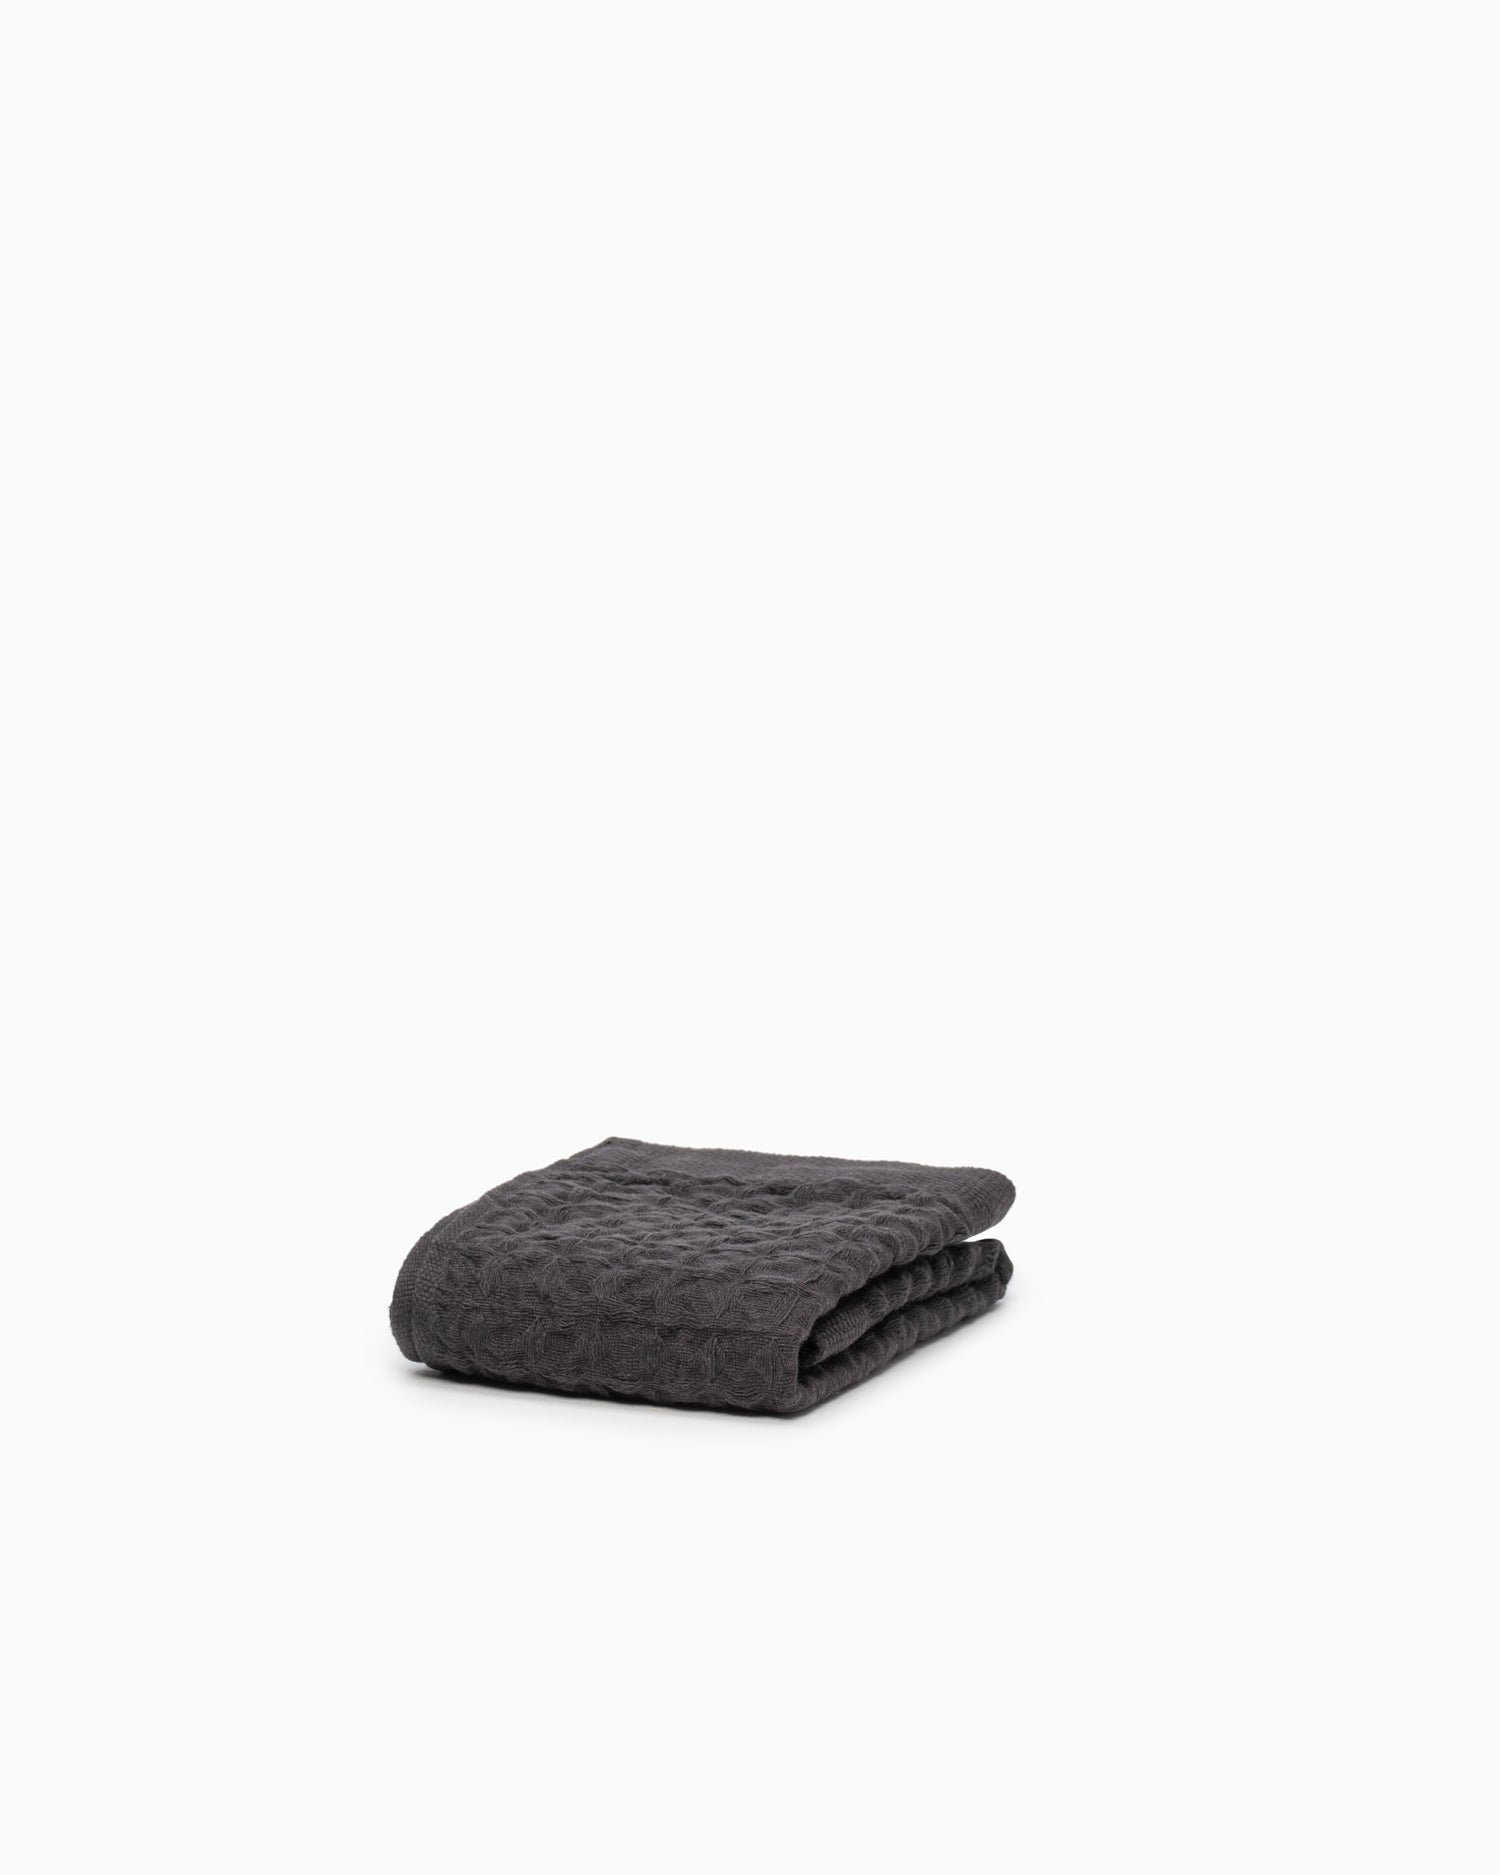 Economy Bath Towel, 24x50-10 LBS, 4 DZ/cs – Raviolinen Inc.